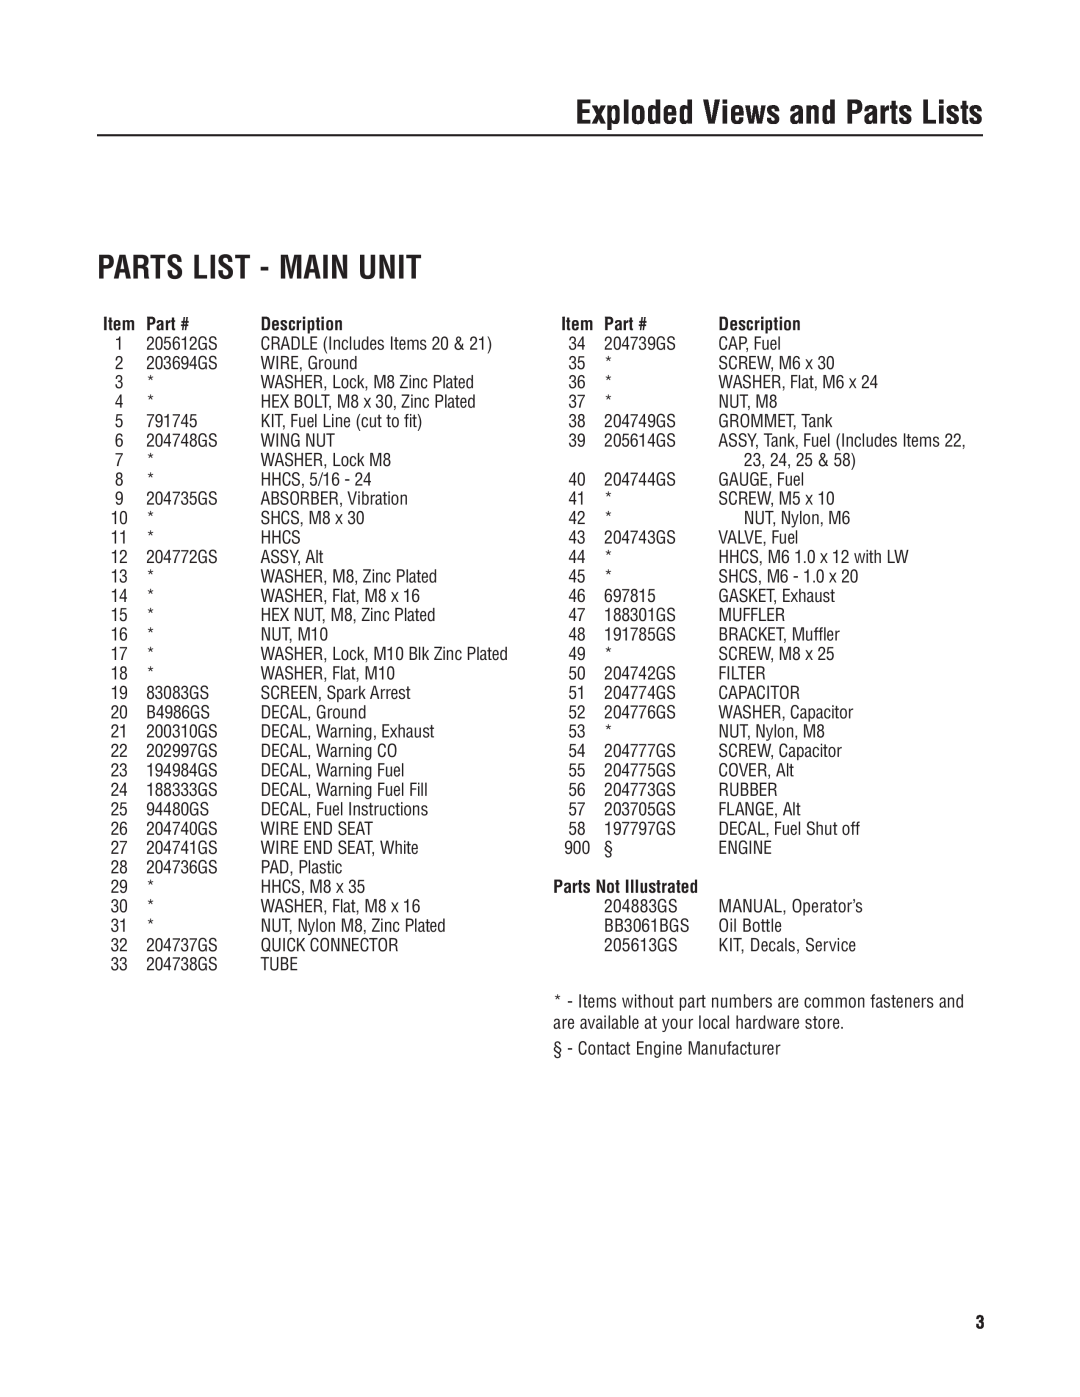 Briggs & Stratton 30372 manual Parts List - Main Unit, Item, Part #, Description, Parts Not Illustrated 